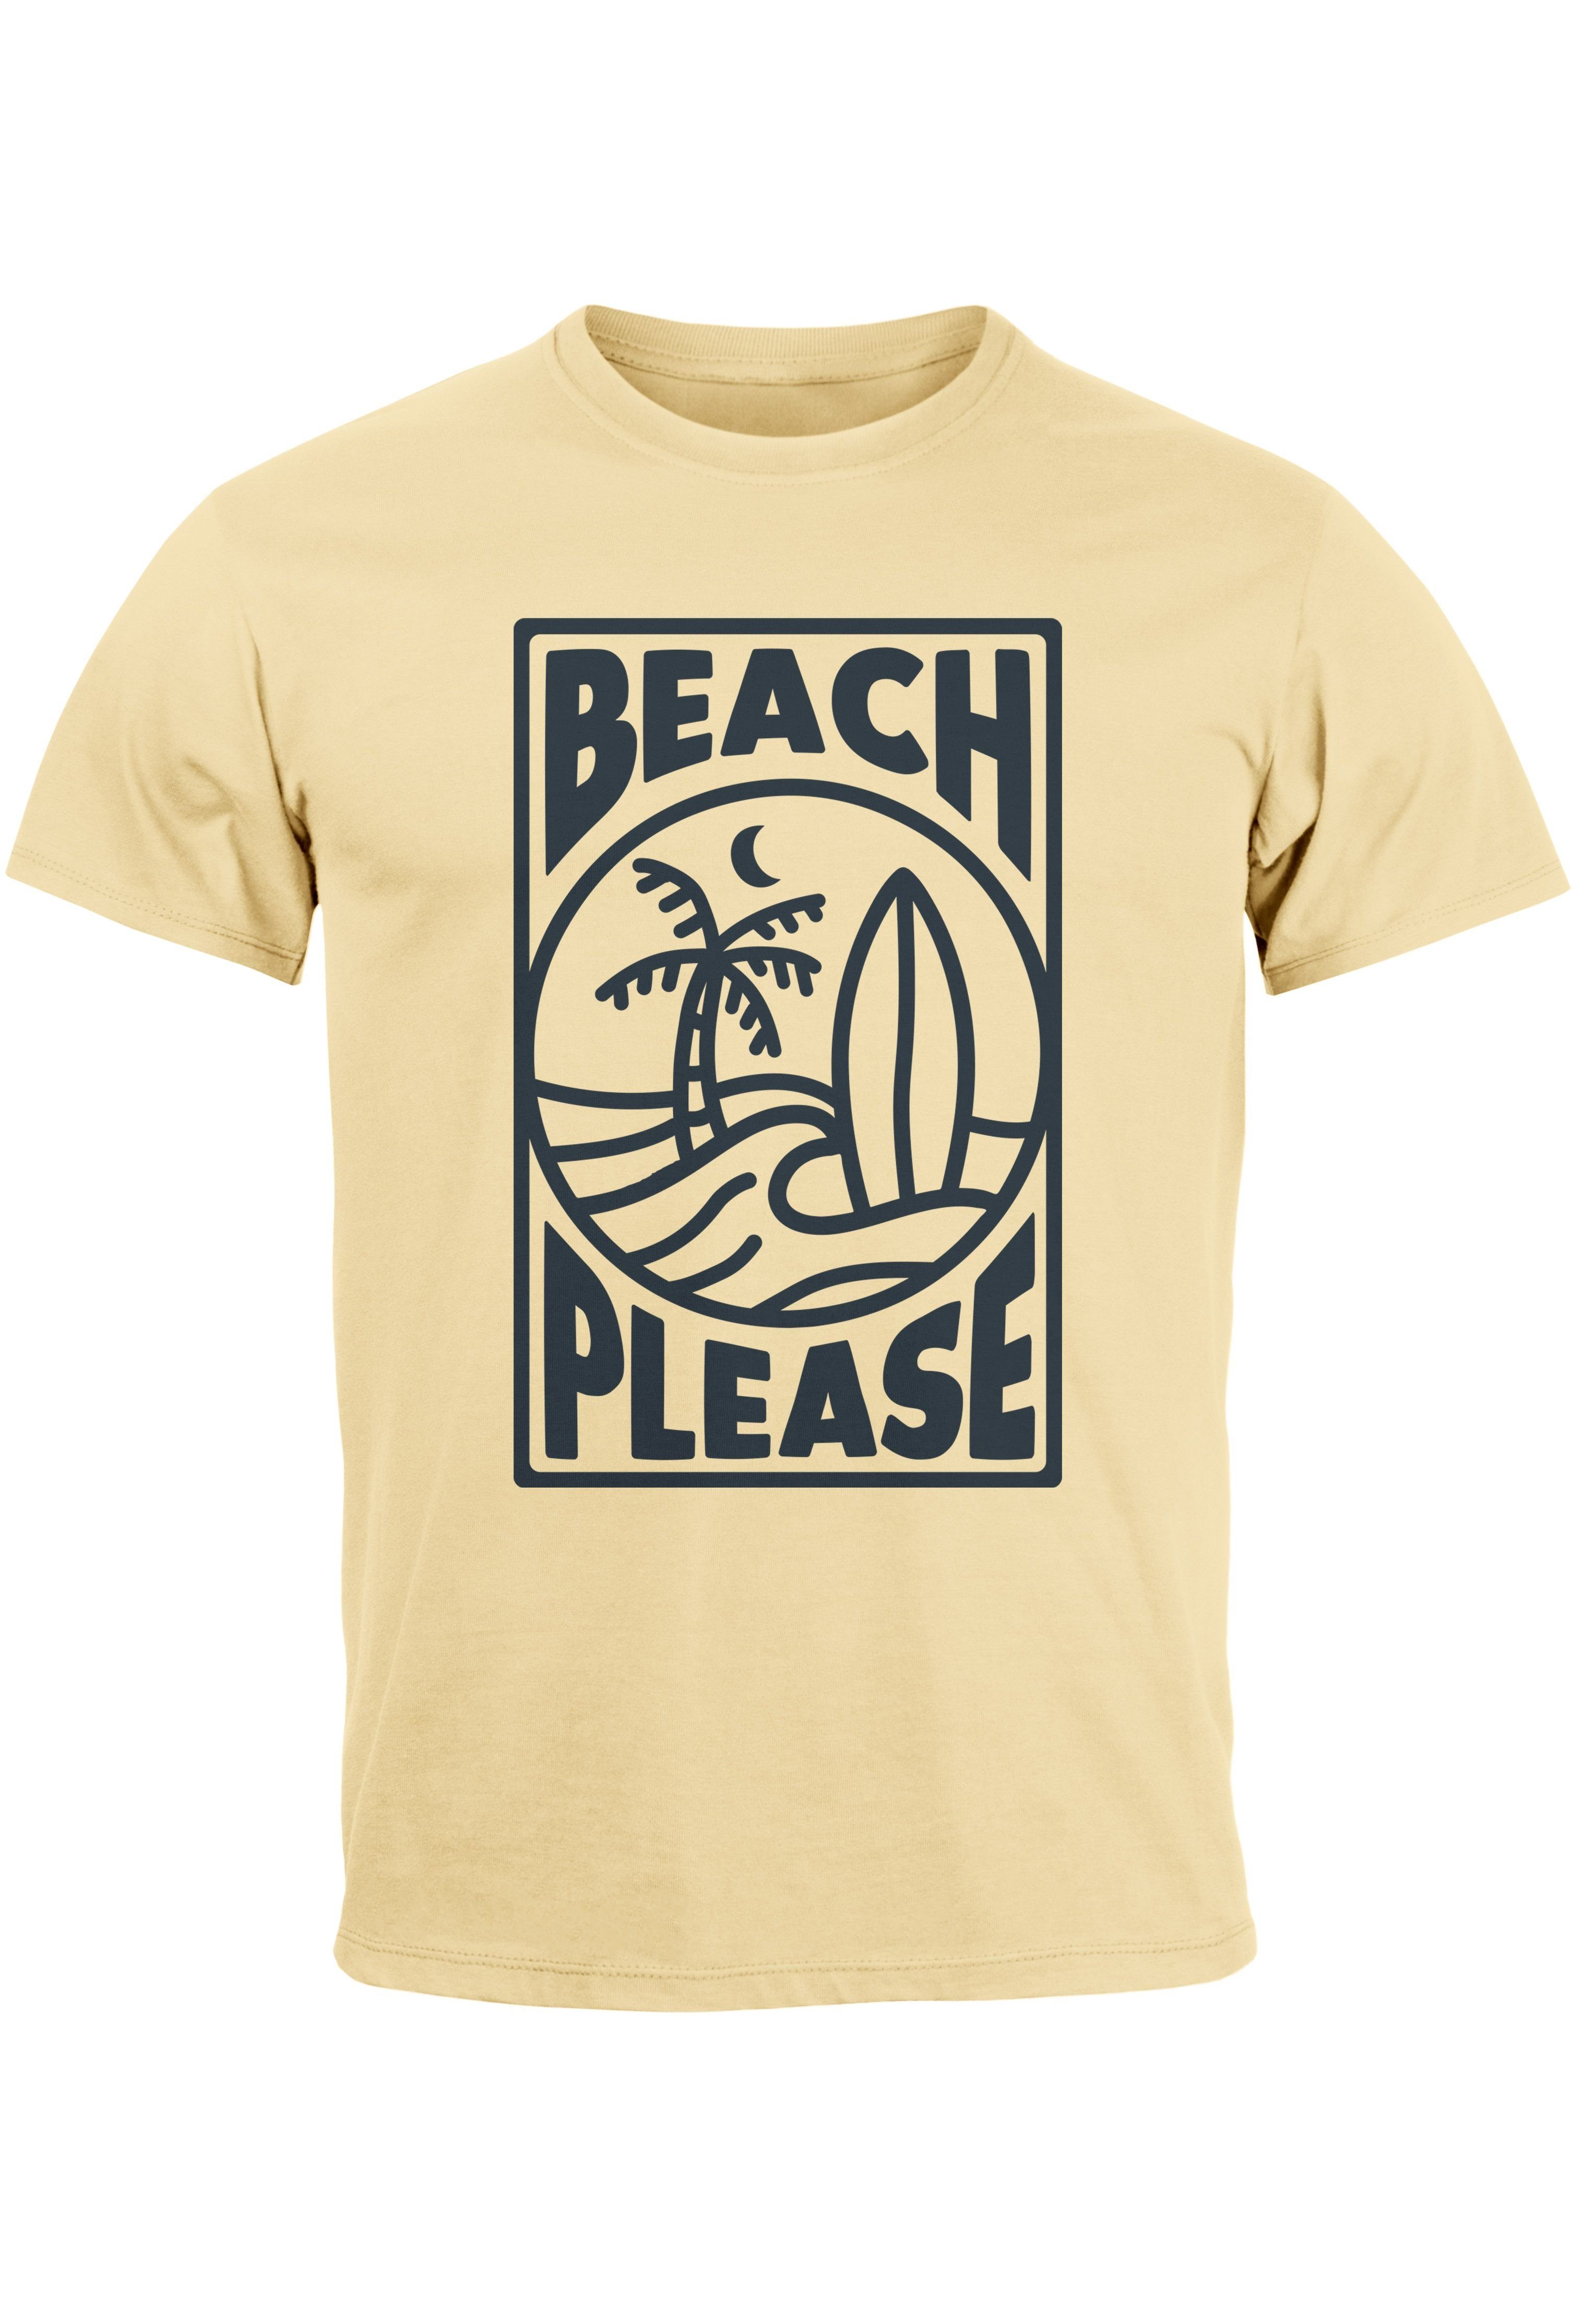 Welle Print-Shirt Sommer Neverless mit Beach Surfboard Herren natur Please T-Shirt Print Print Wave Surfing